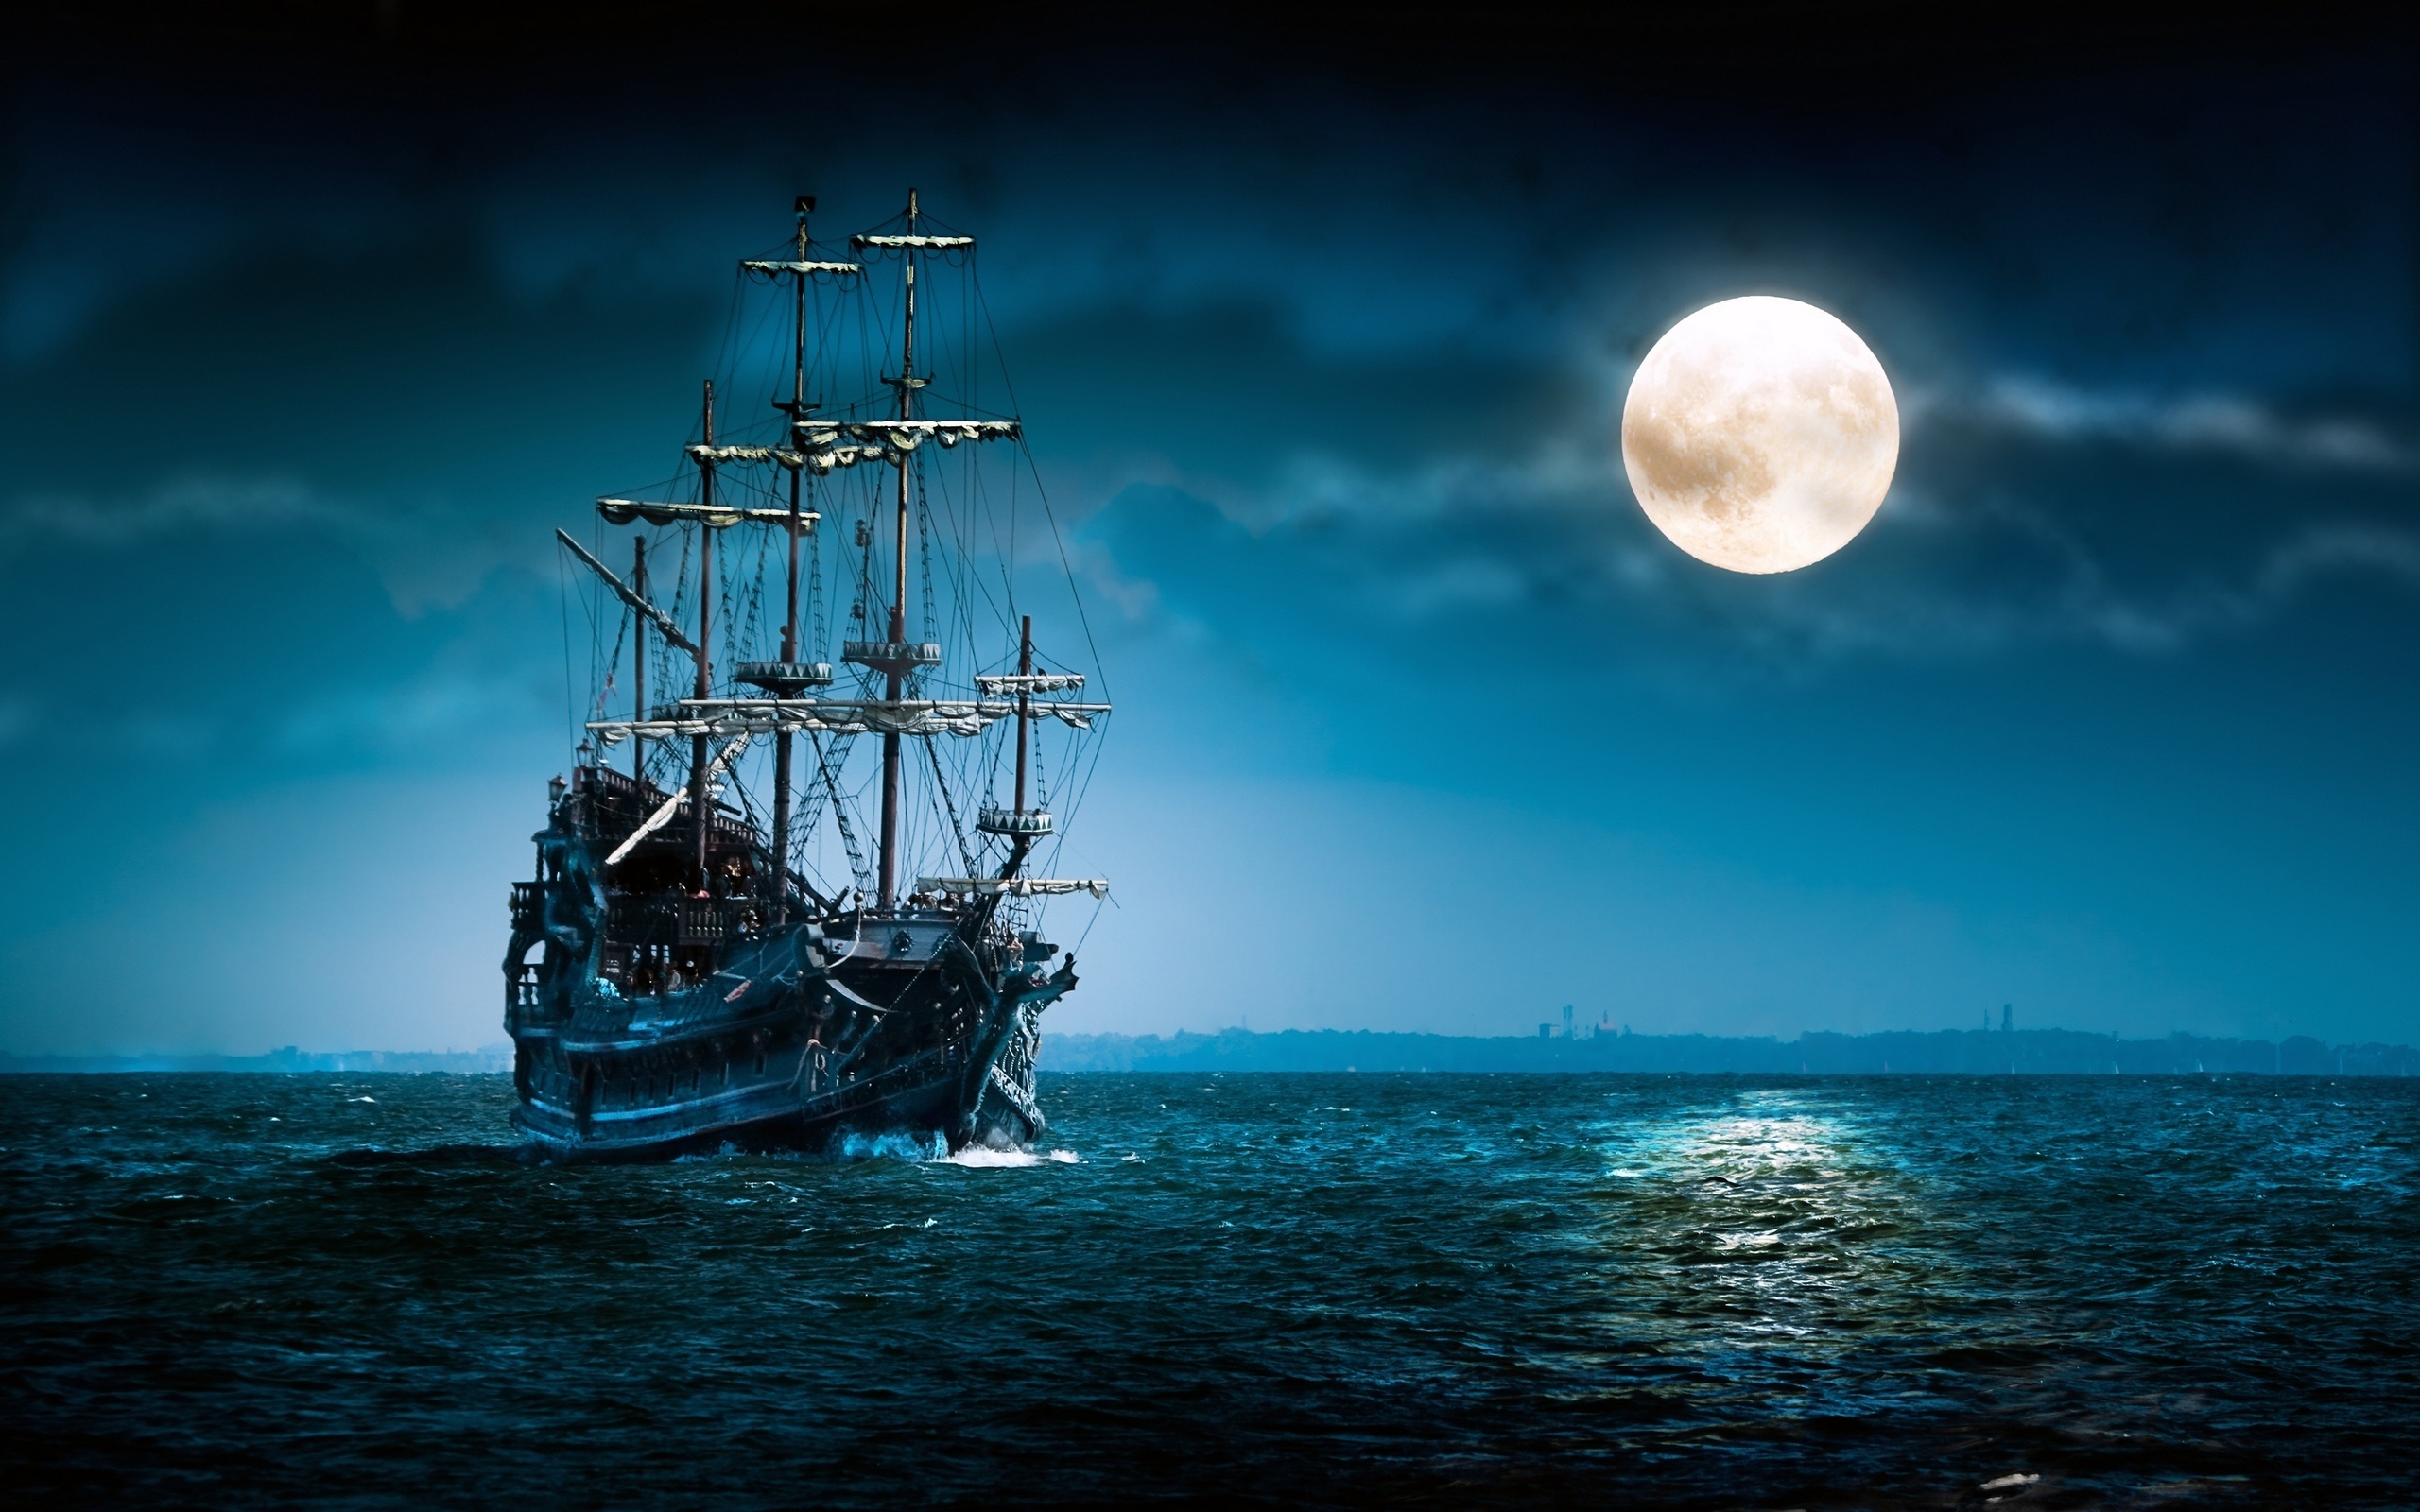 sailboat sea moon ship boat ocean night mood moon wallpaper background